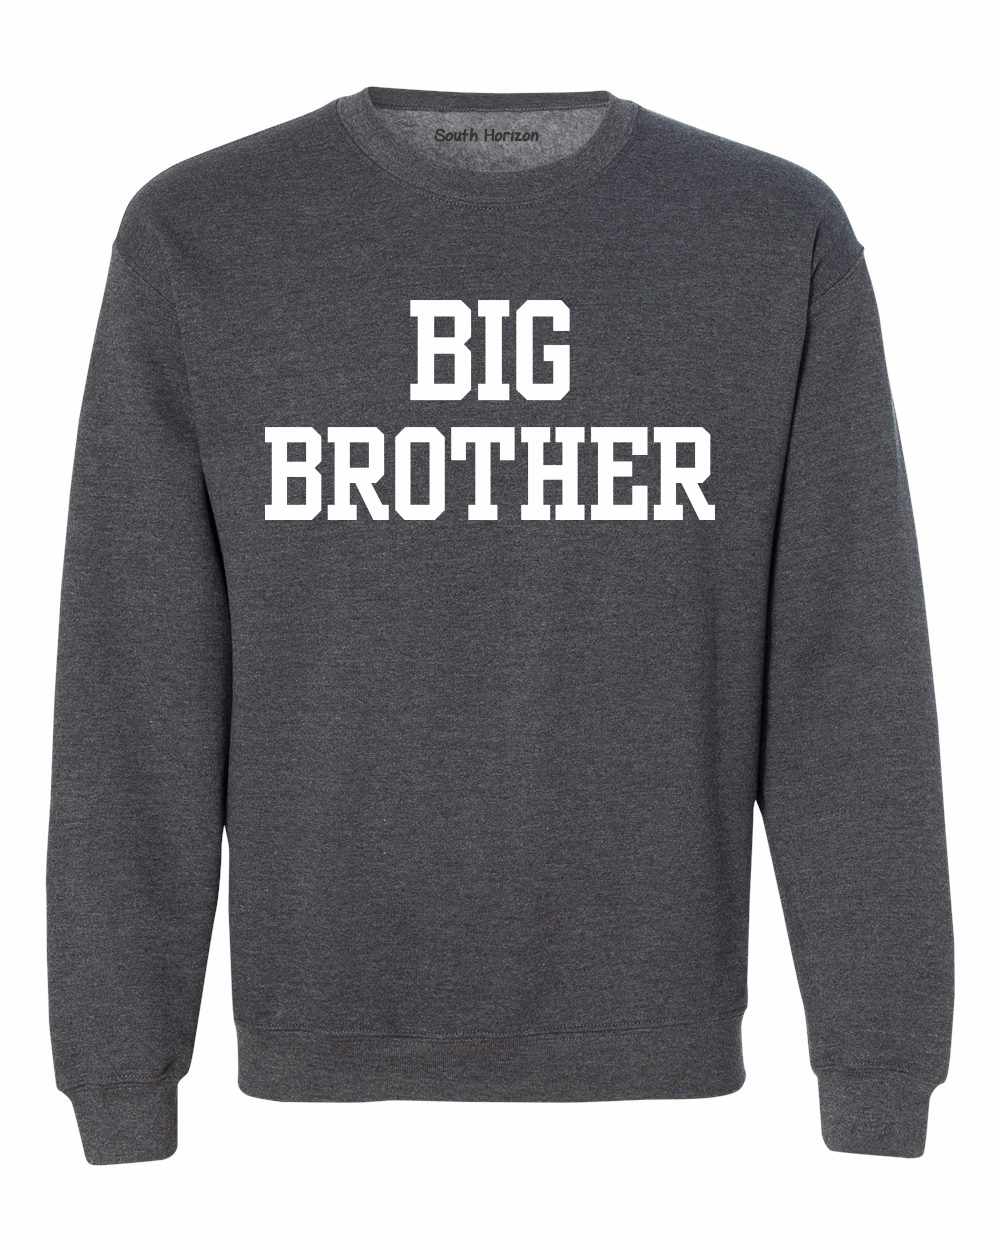 BIG BROTHER Sweat Shirt (#1110-11)